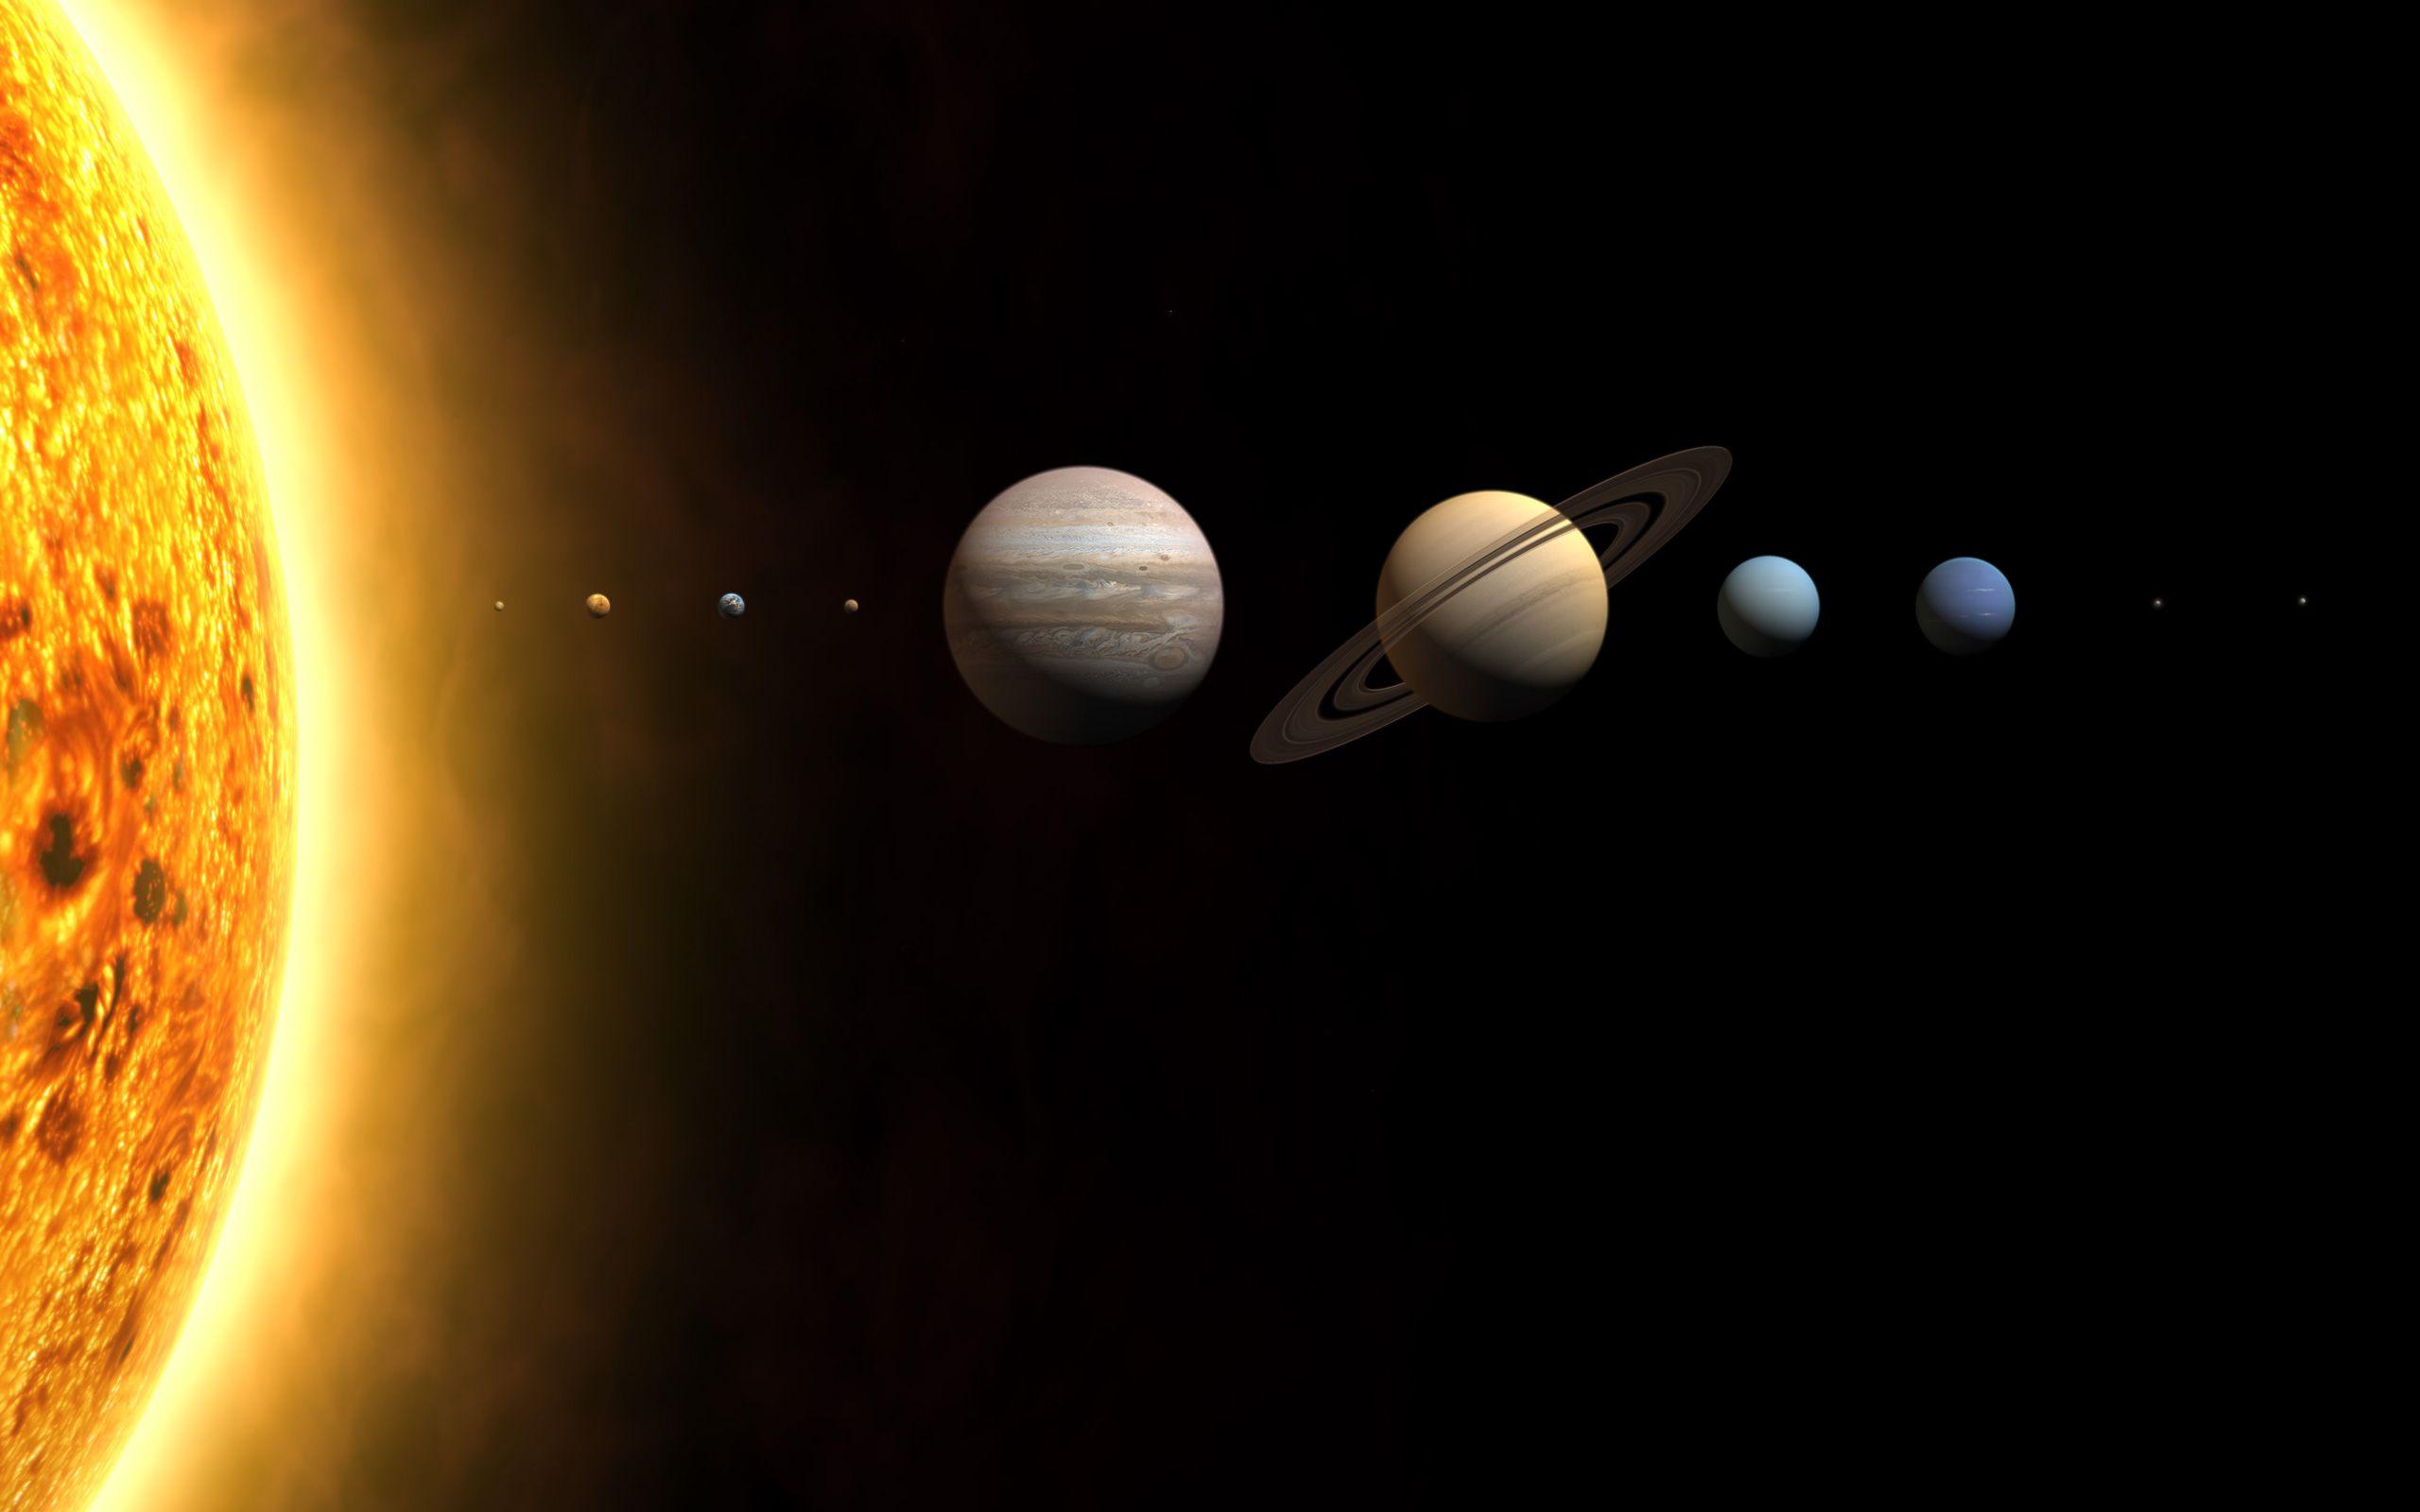 Sci Fi Solar System 4k Ultra HD Wallpaper by JasminZejnic